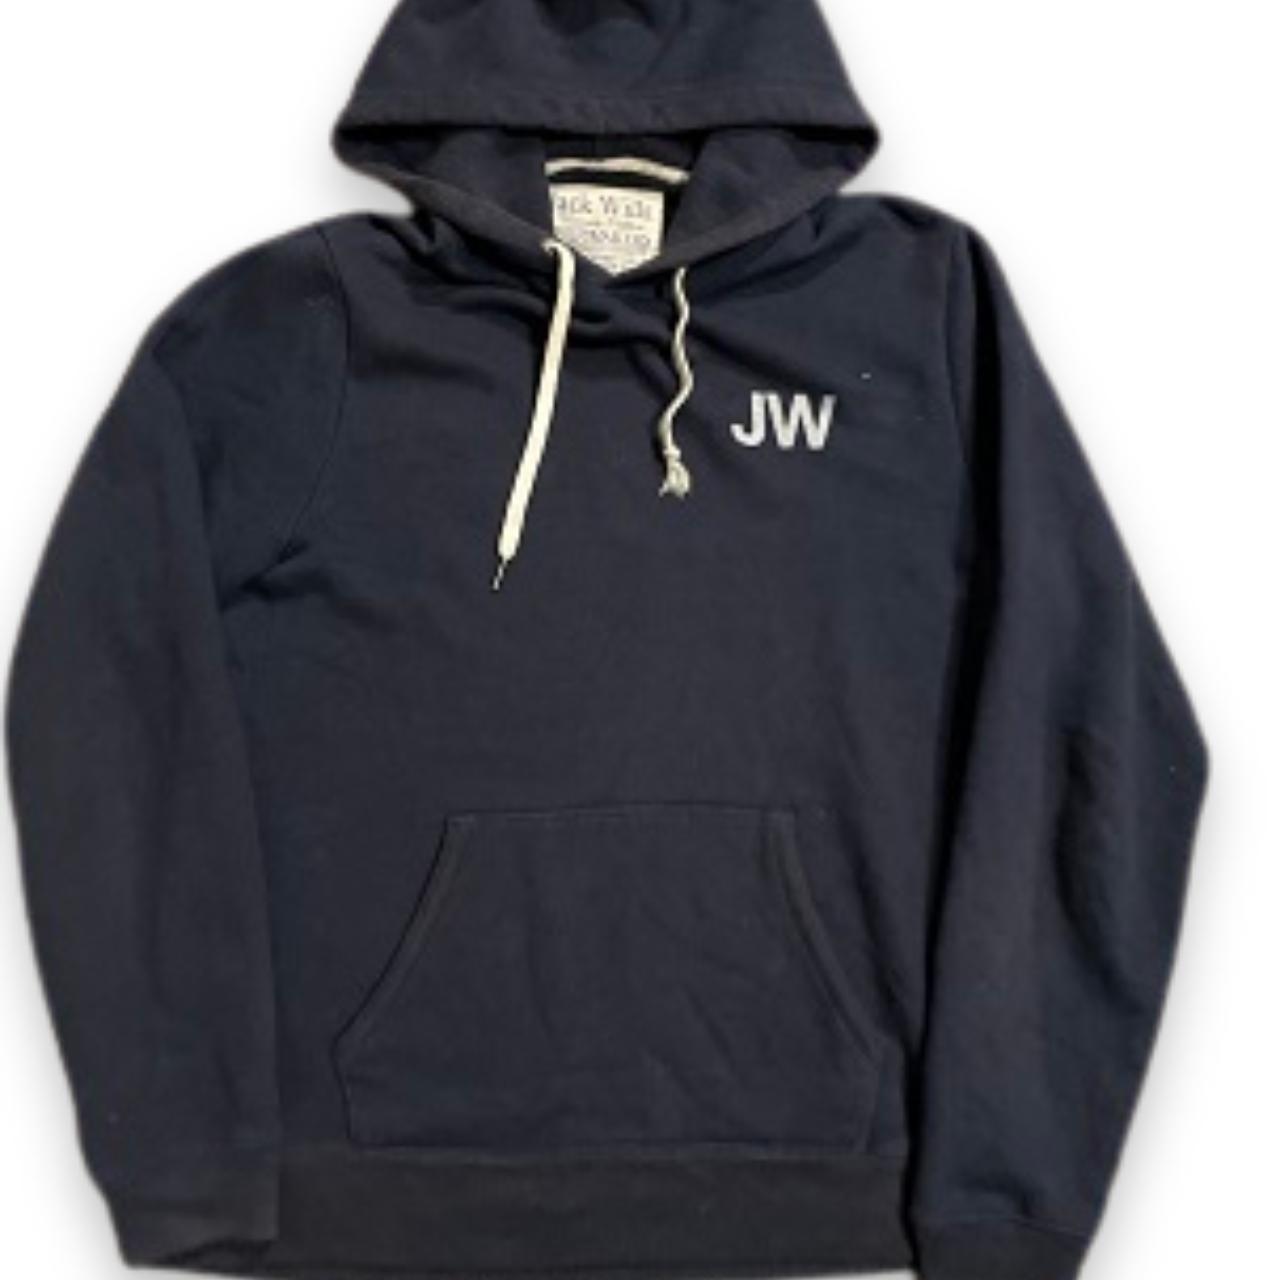 Vintage Jack Wills Thurlby back graphic overhead hoodie in navy